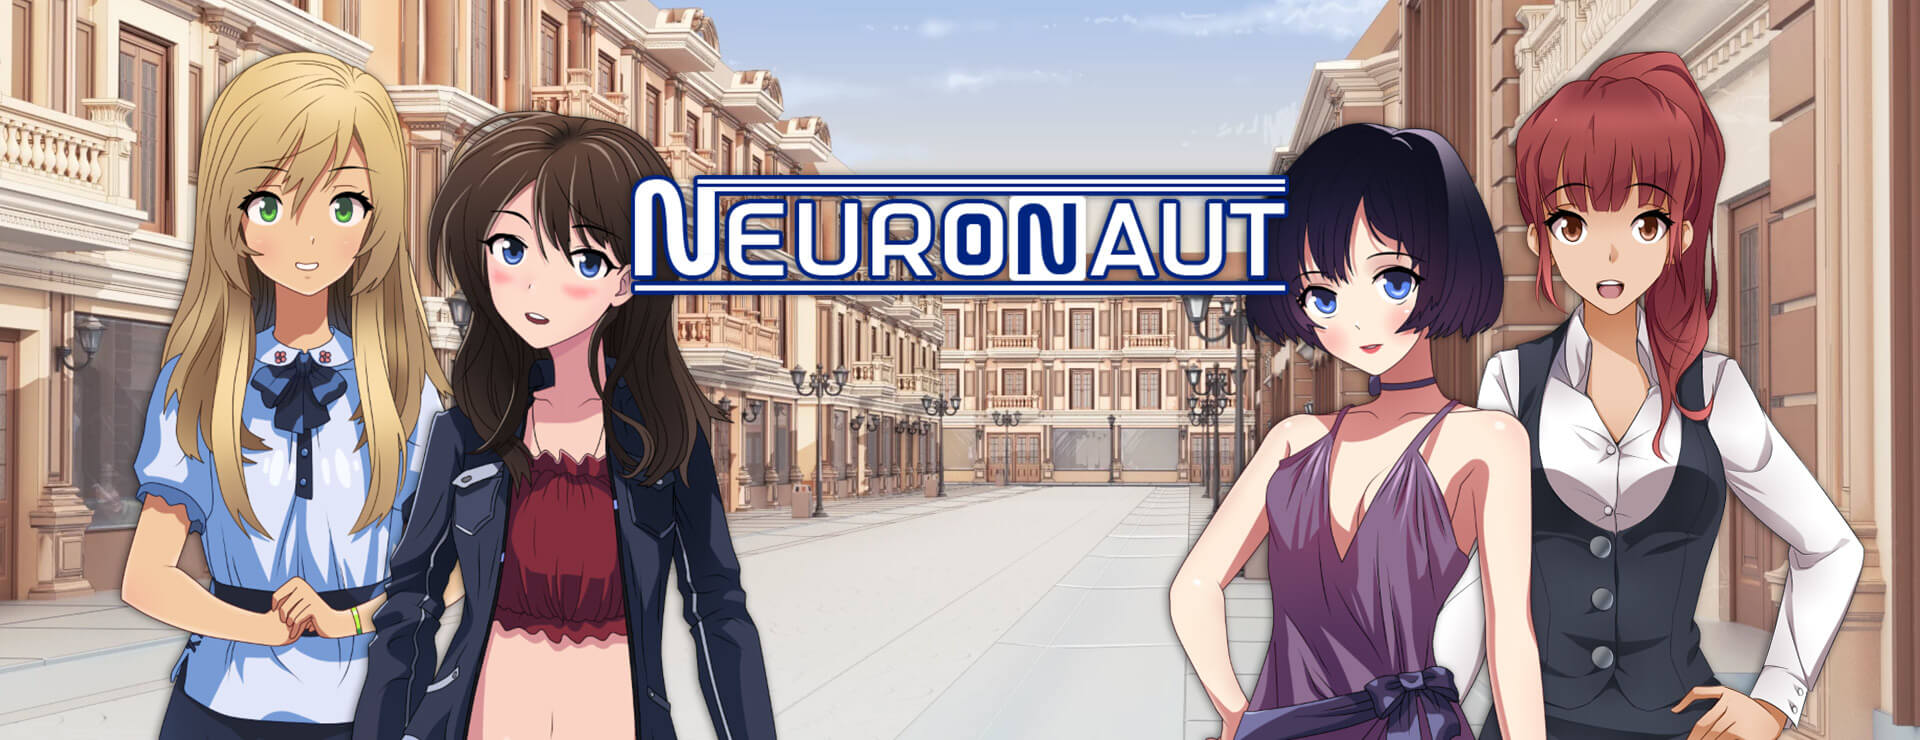 Neuronaut - アクションアドベンチャー ゲーム